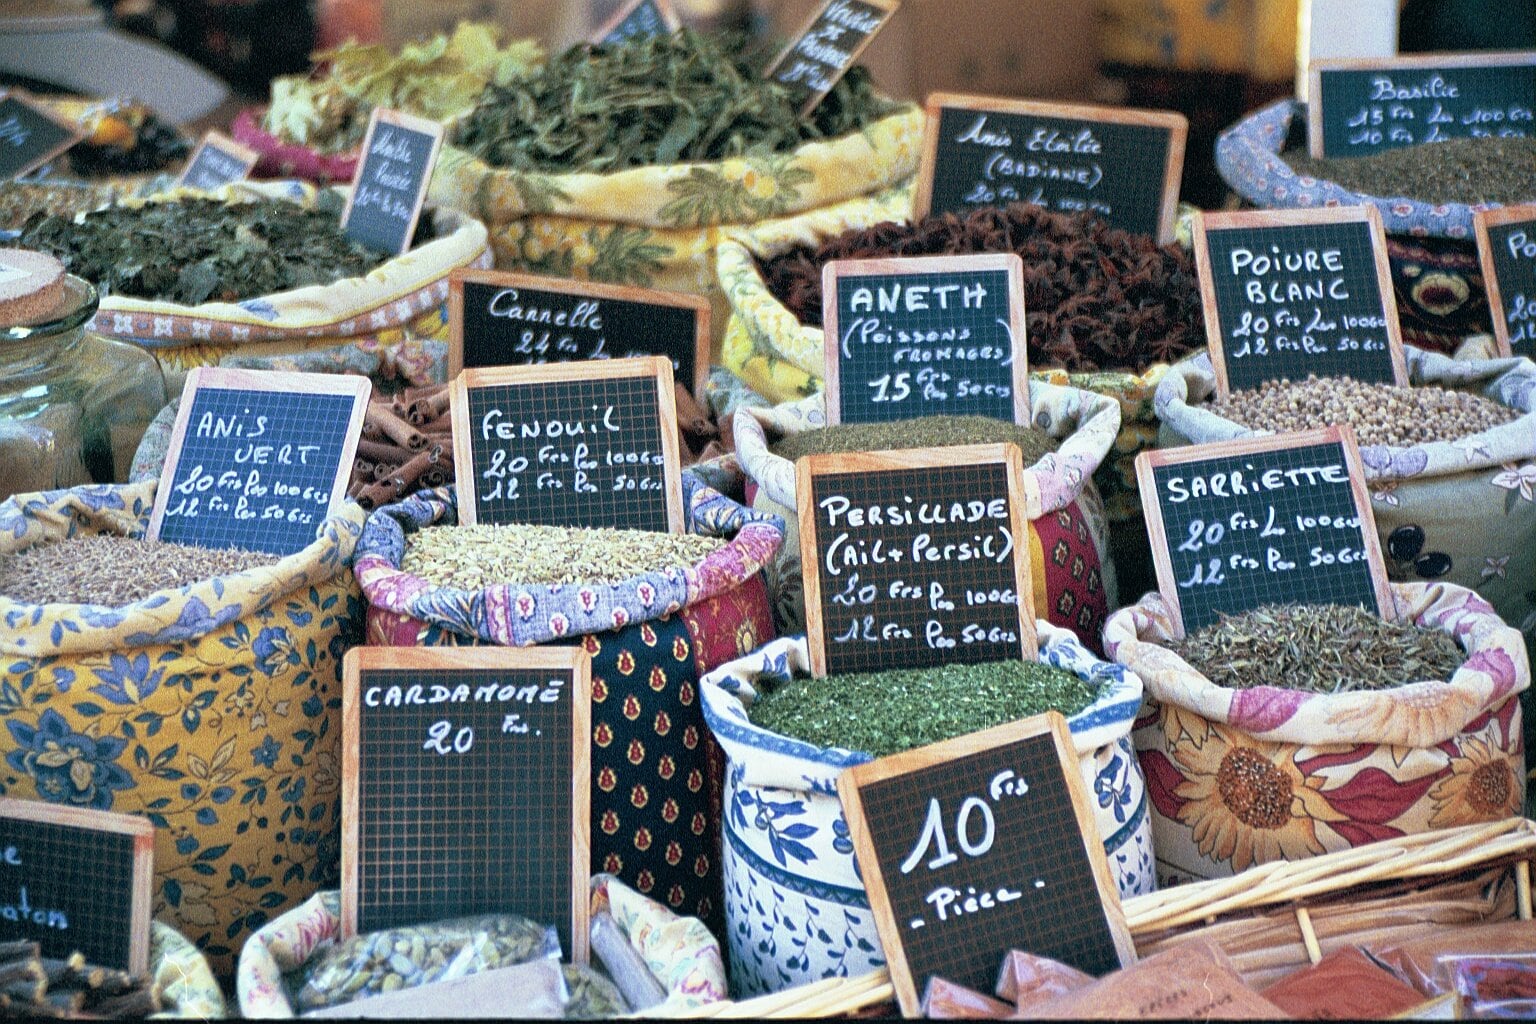 Herb market in France